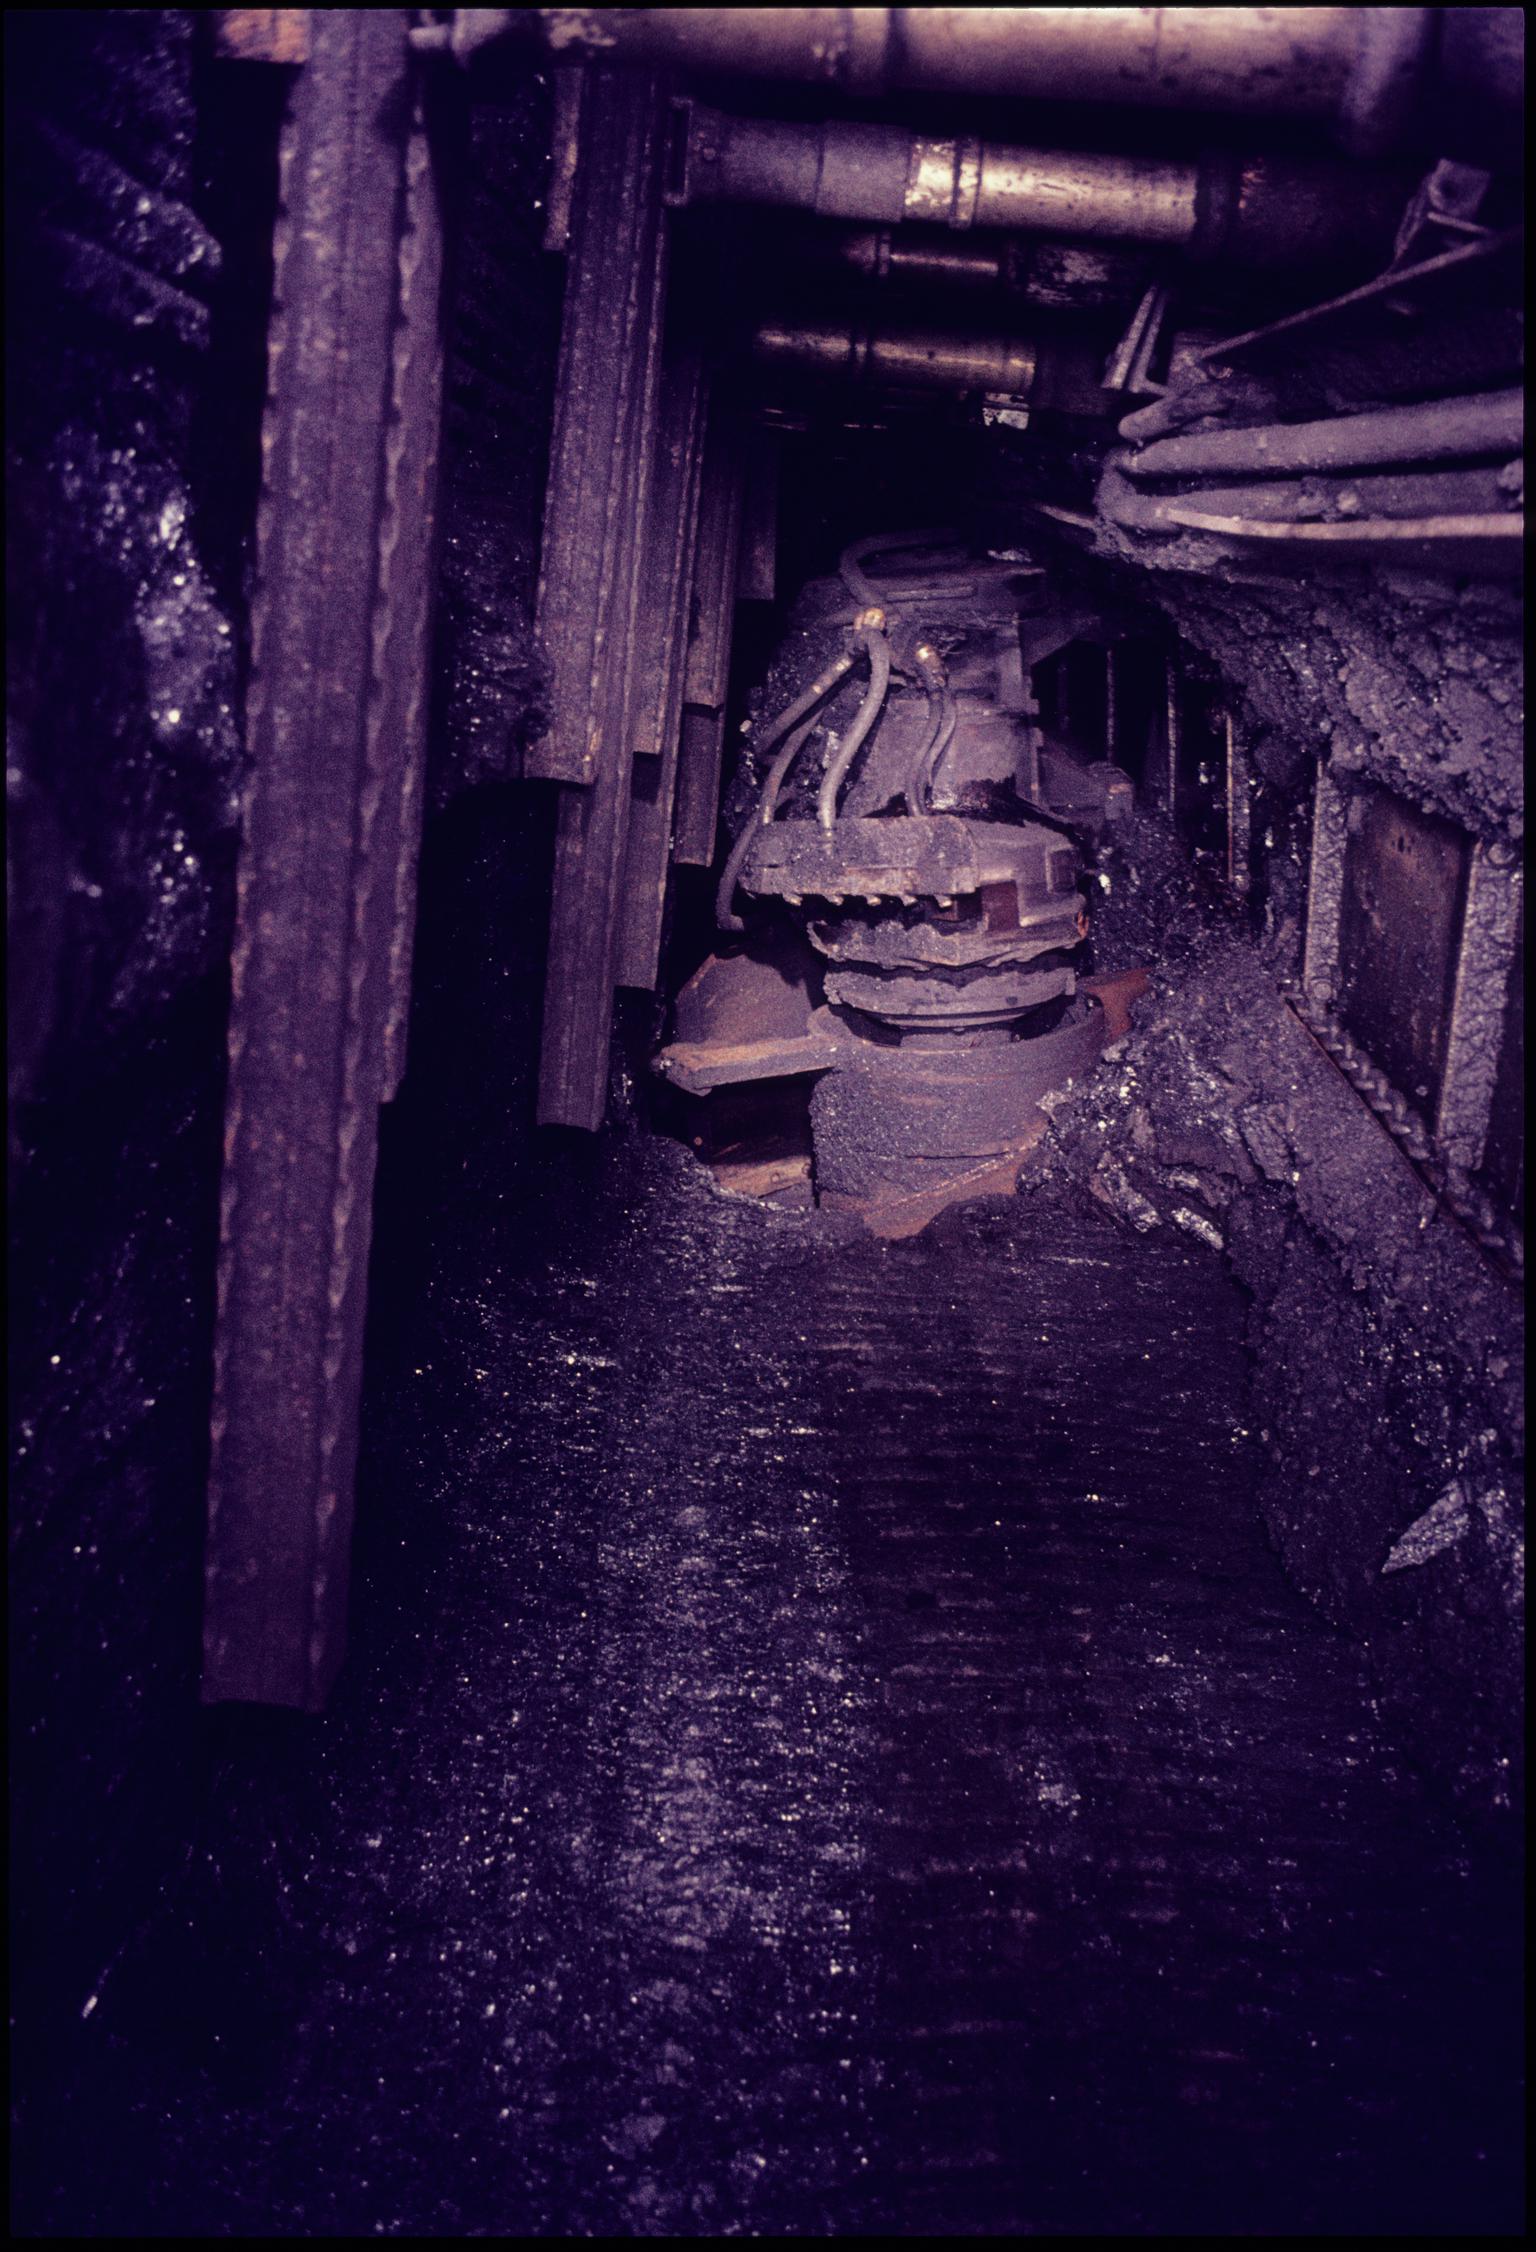 Celynen South Colliery, film slide